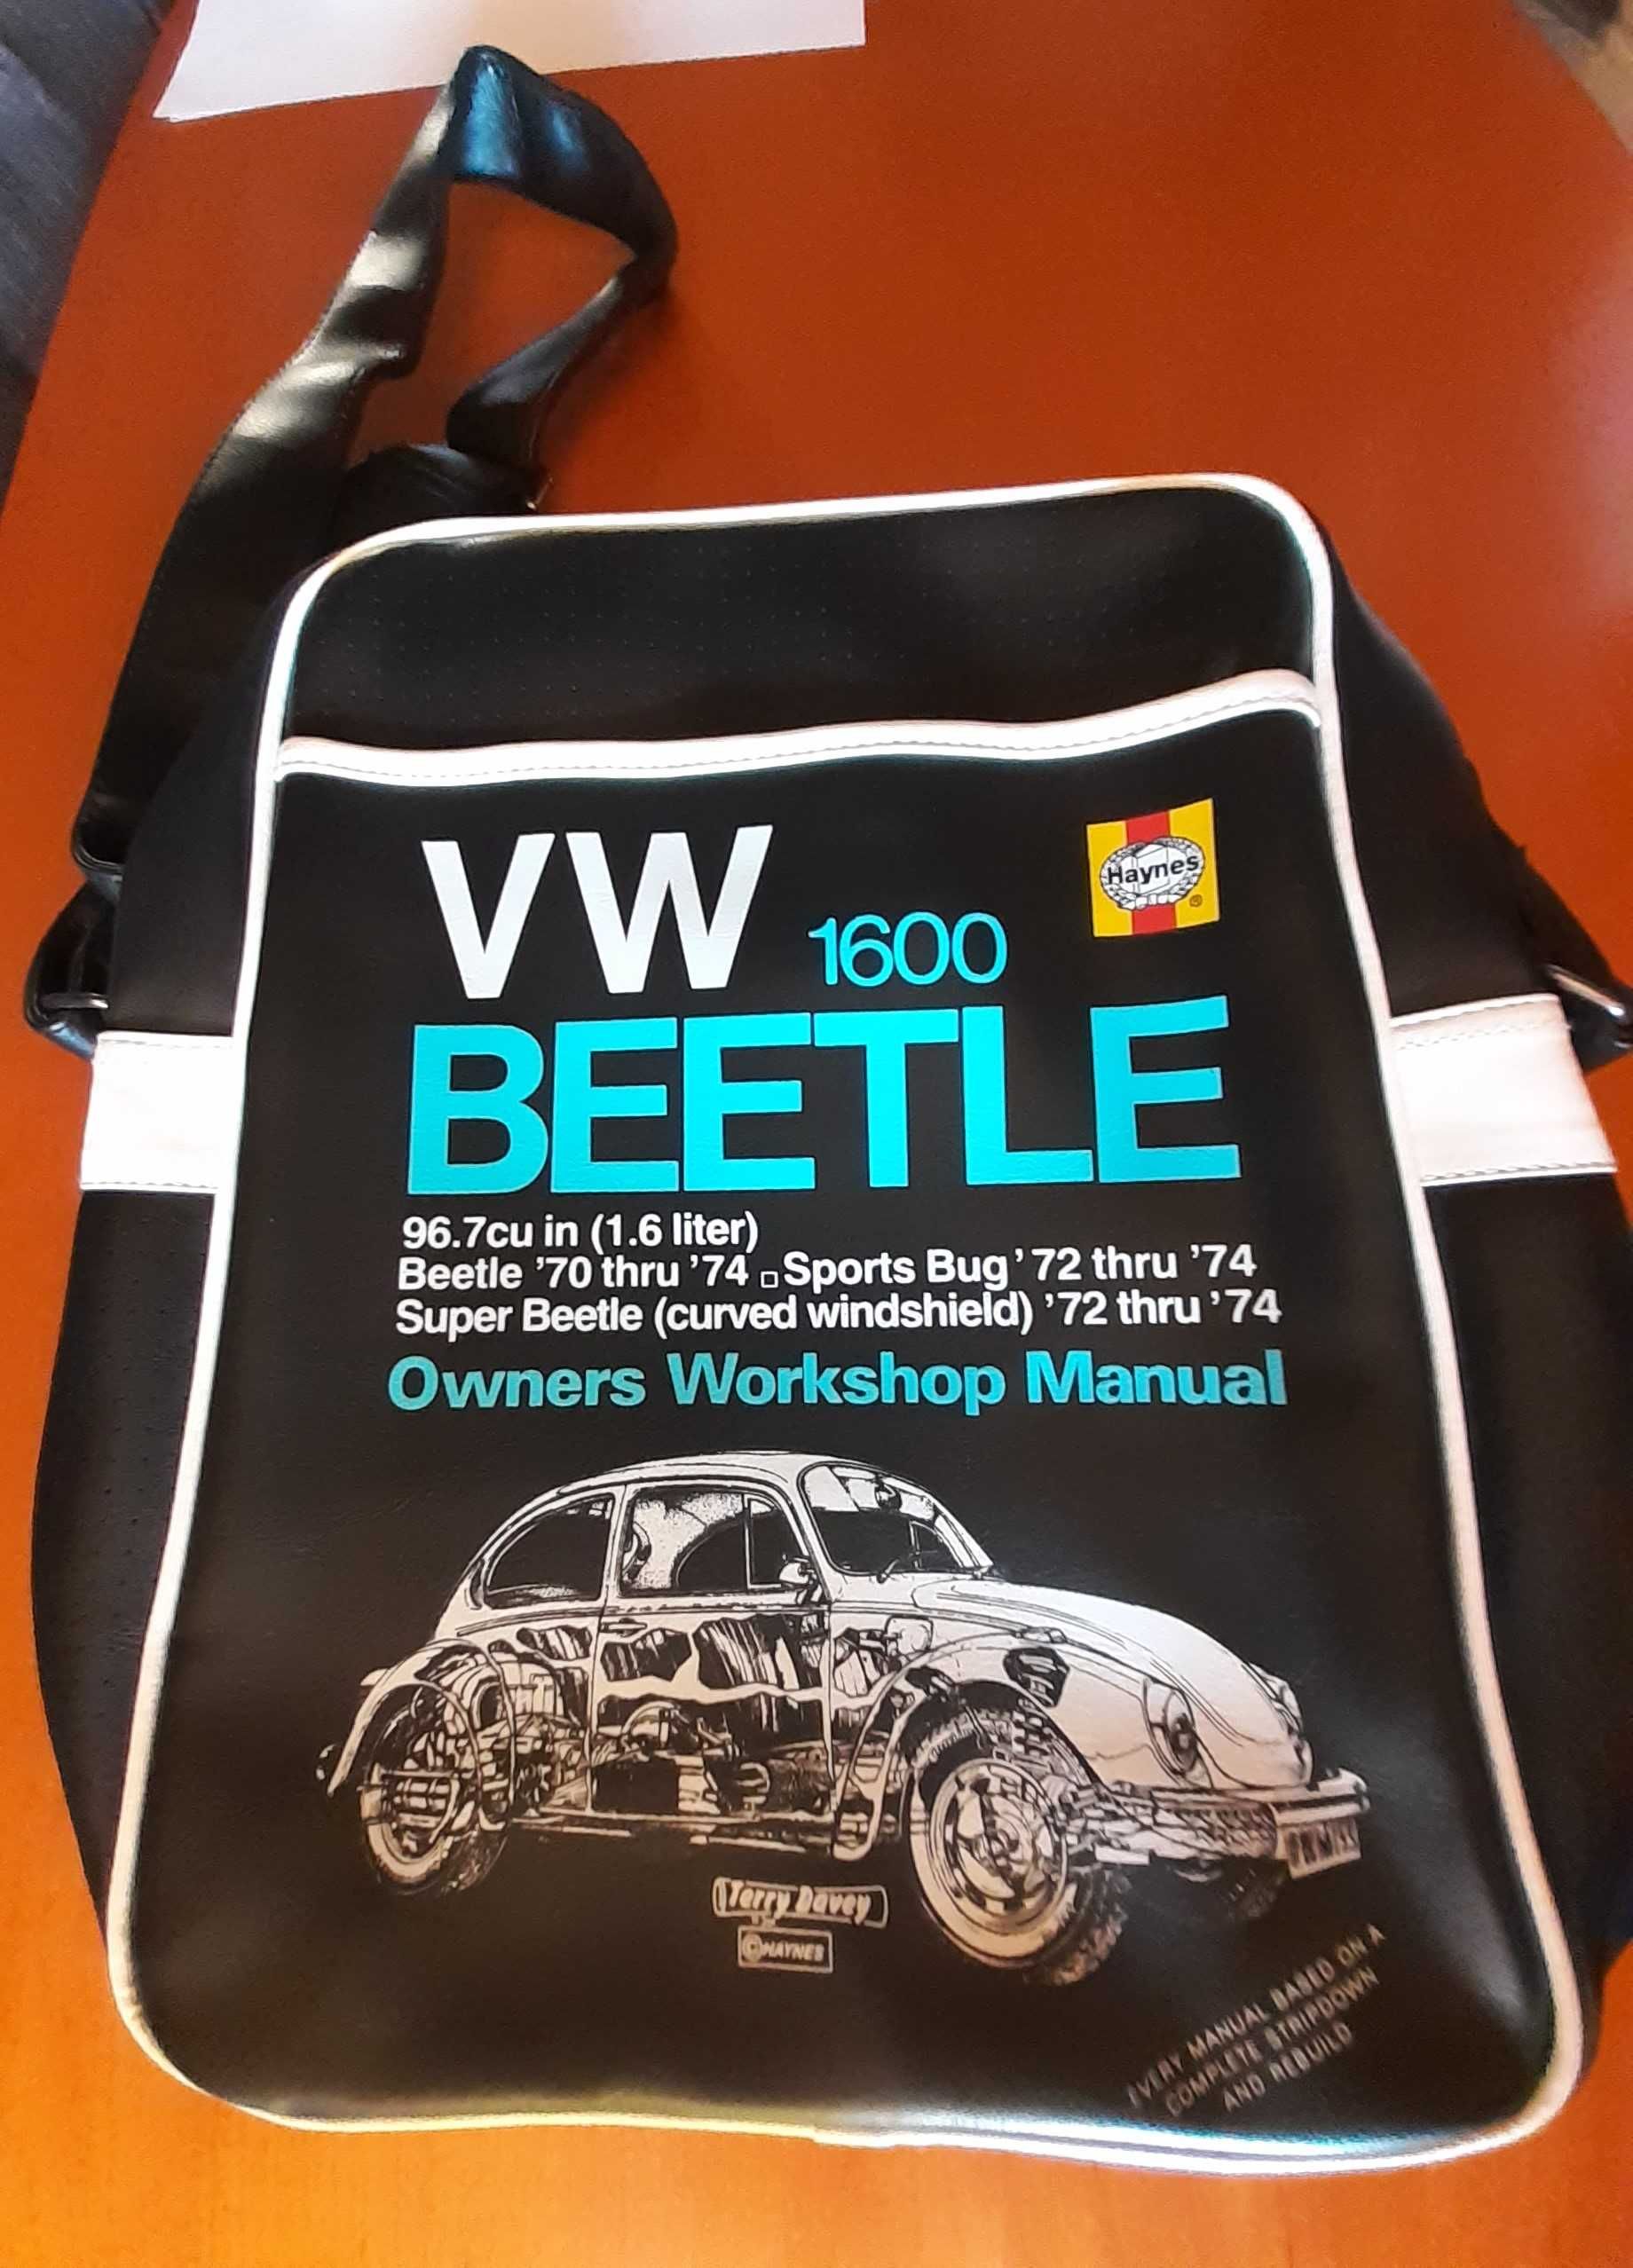 Bolsa da Haynes- VW Beetle